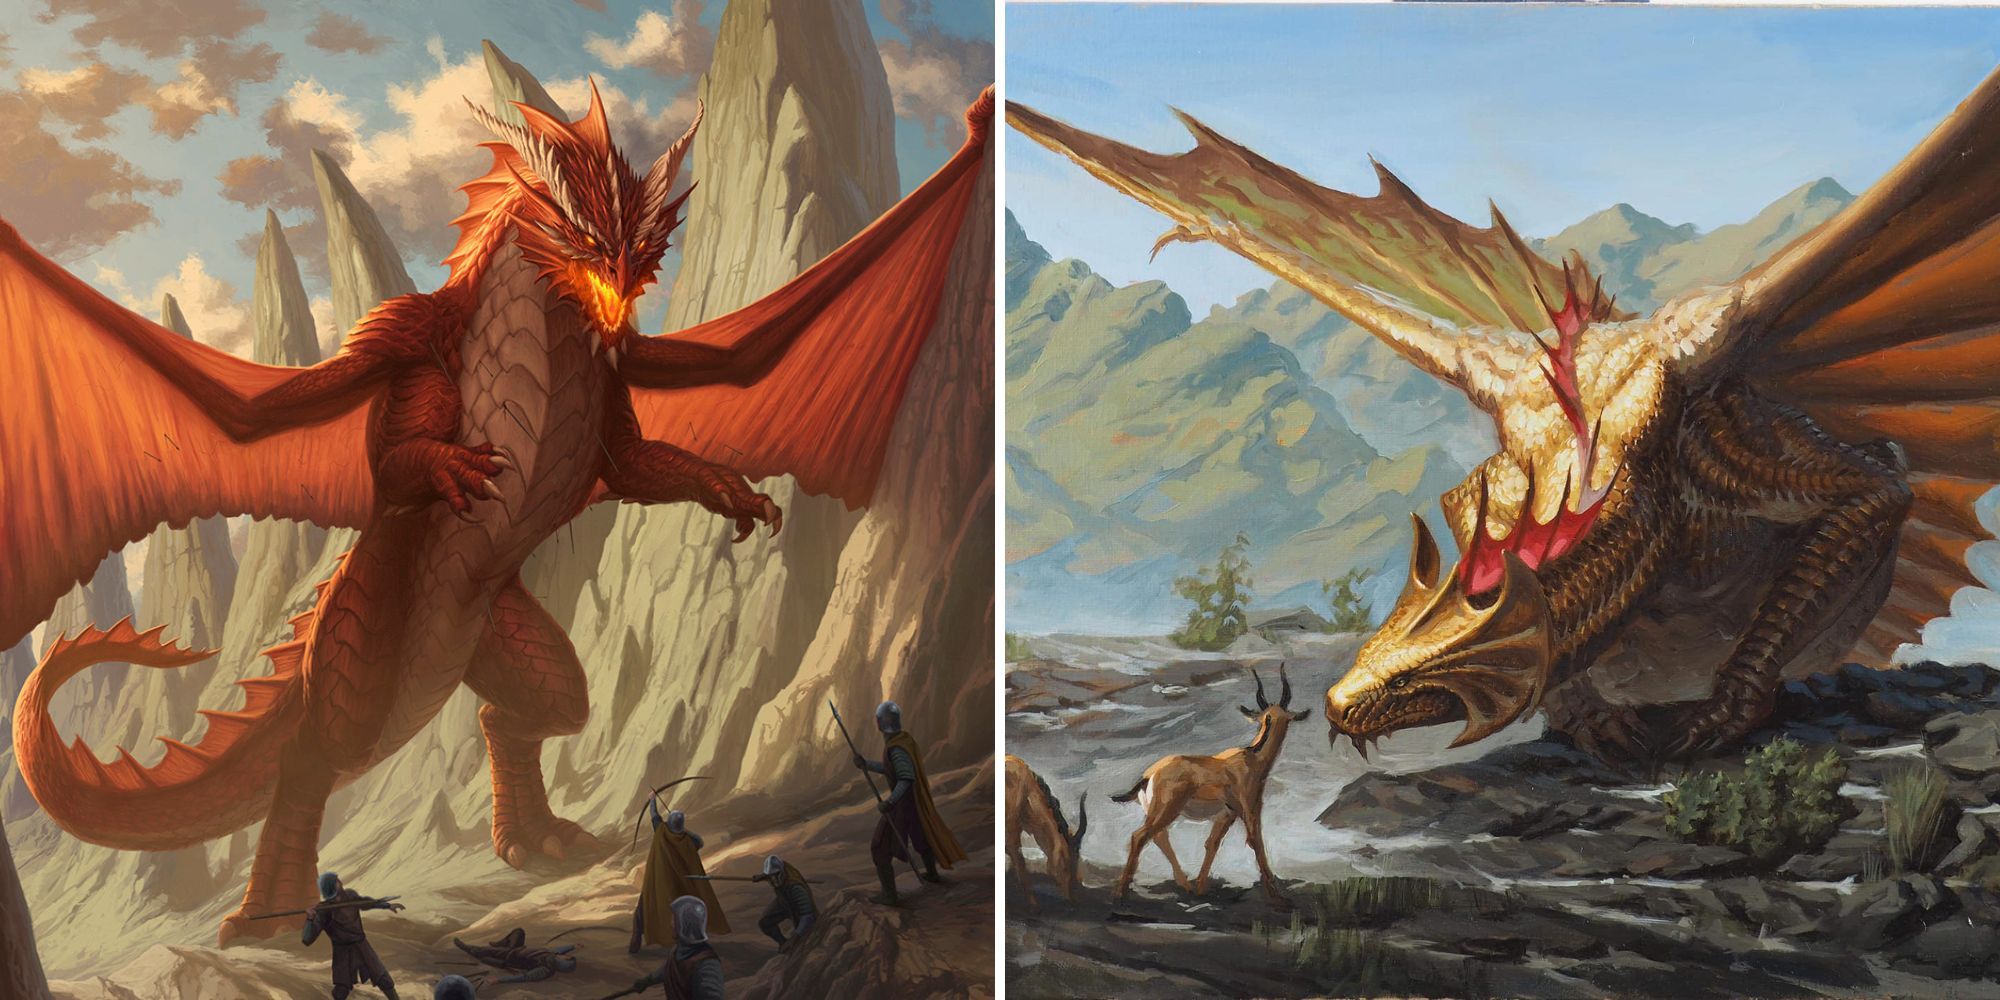 red dragon attacks adventurers against brass dragon meets deer